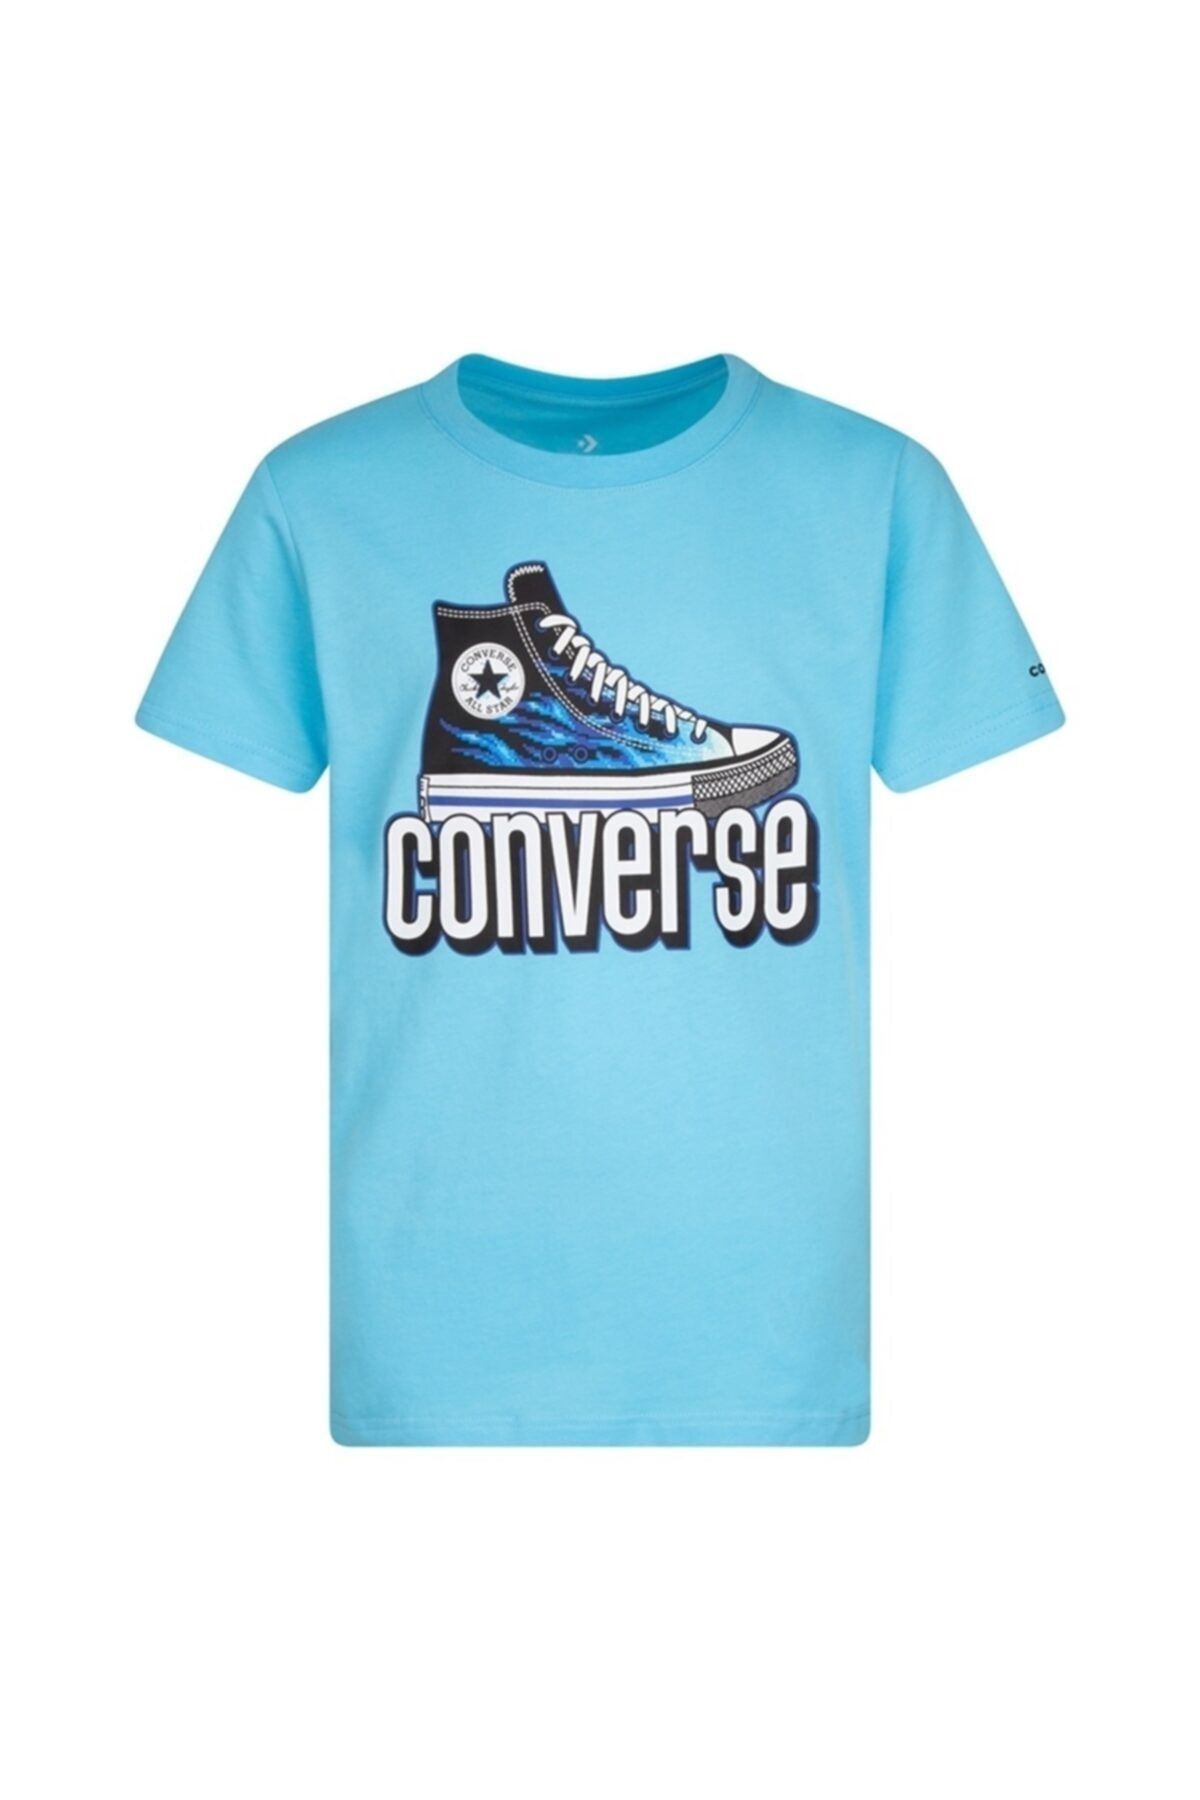 Converse Erkek Çocuk Mavi T-shirt